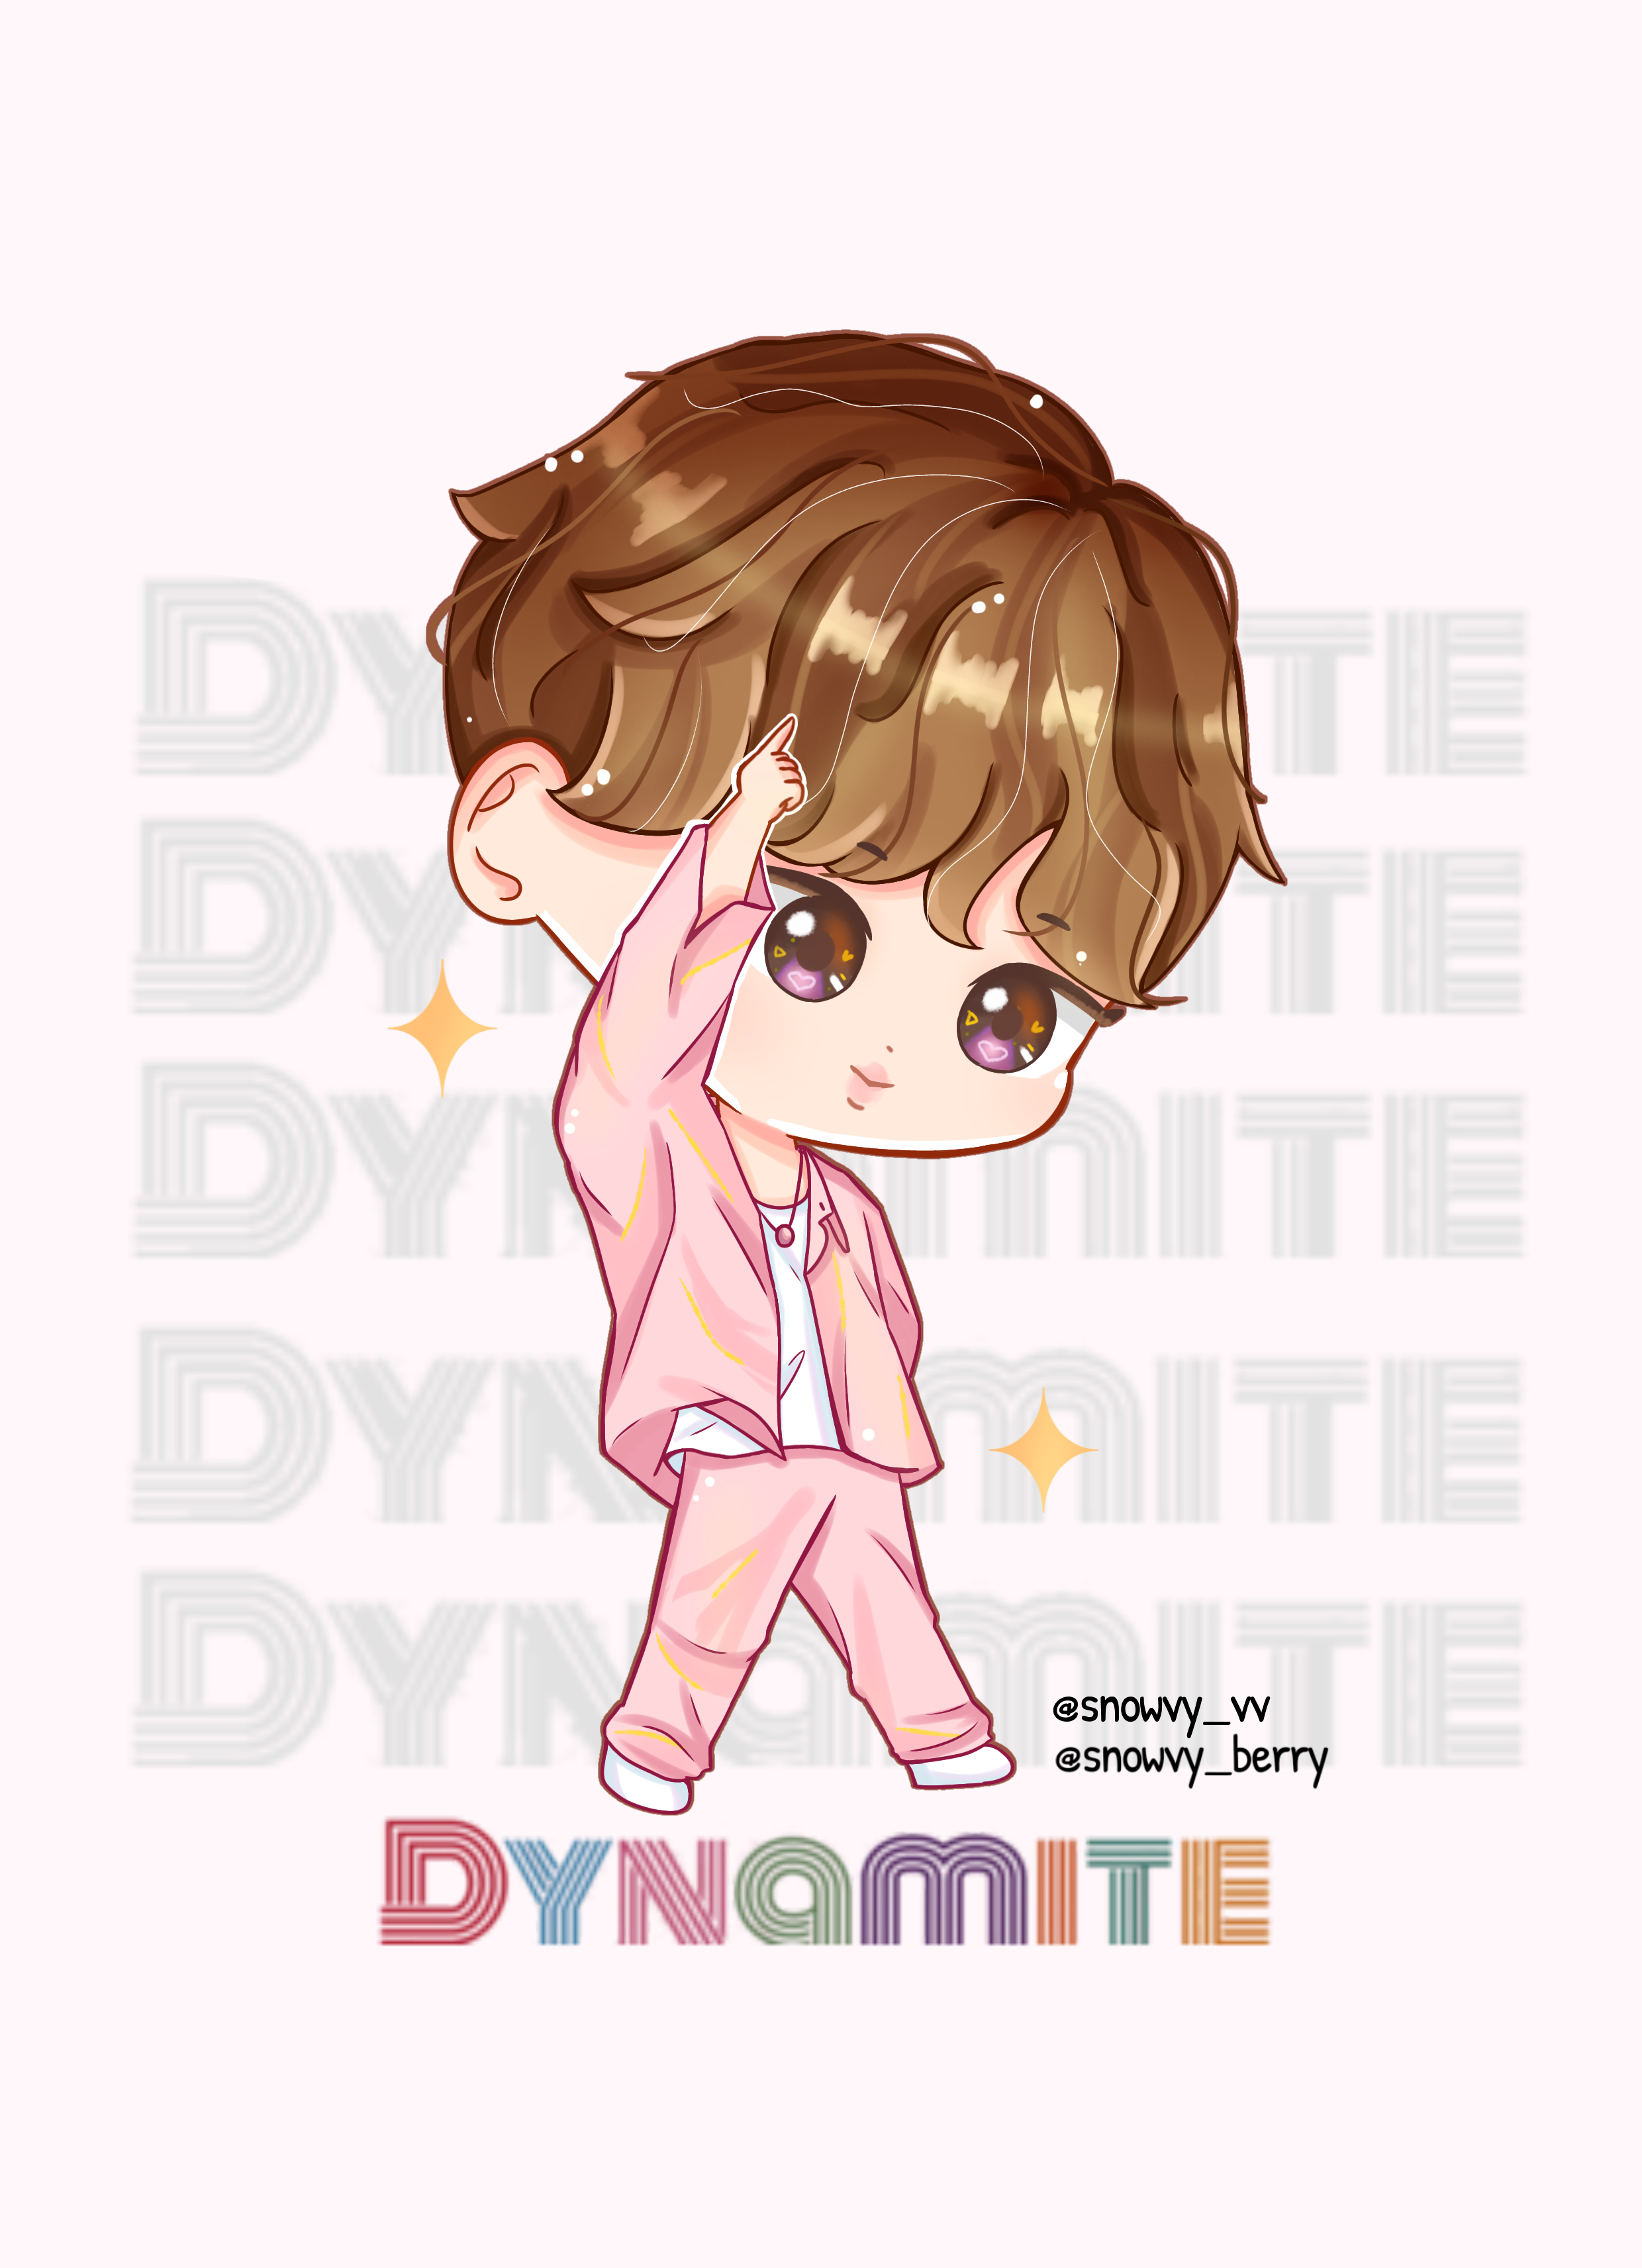 BTS Jin Dynamite by snowvyberry on DeviantArt